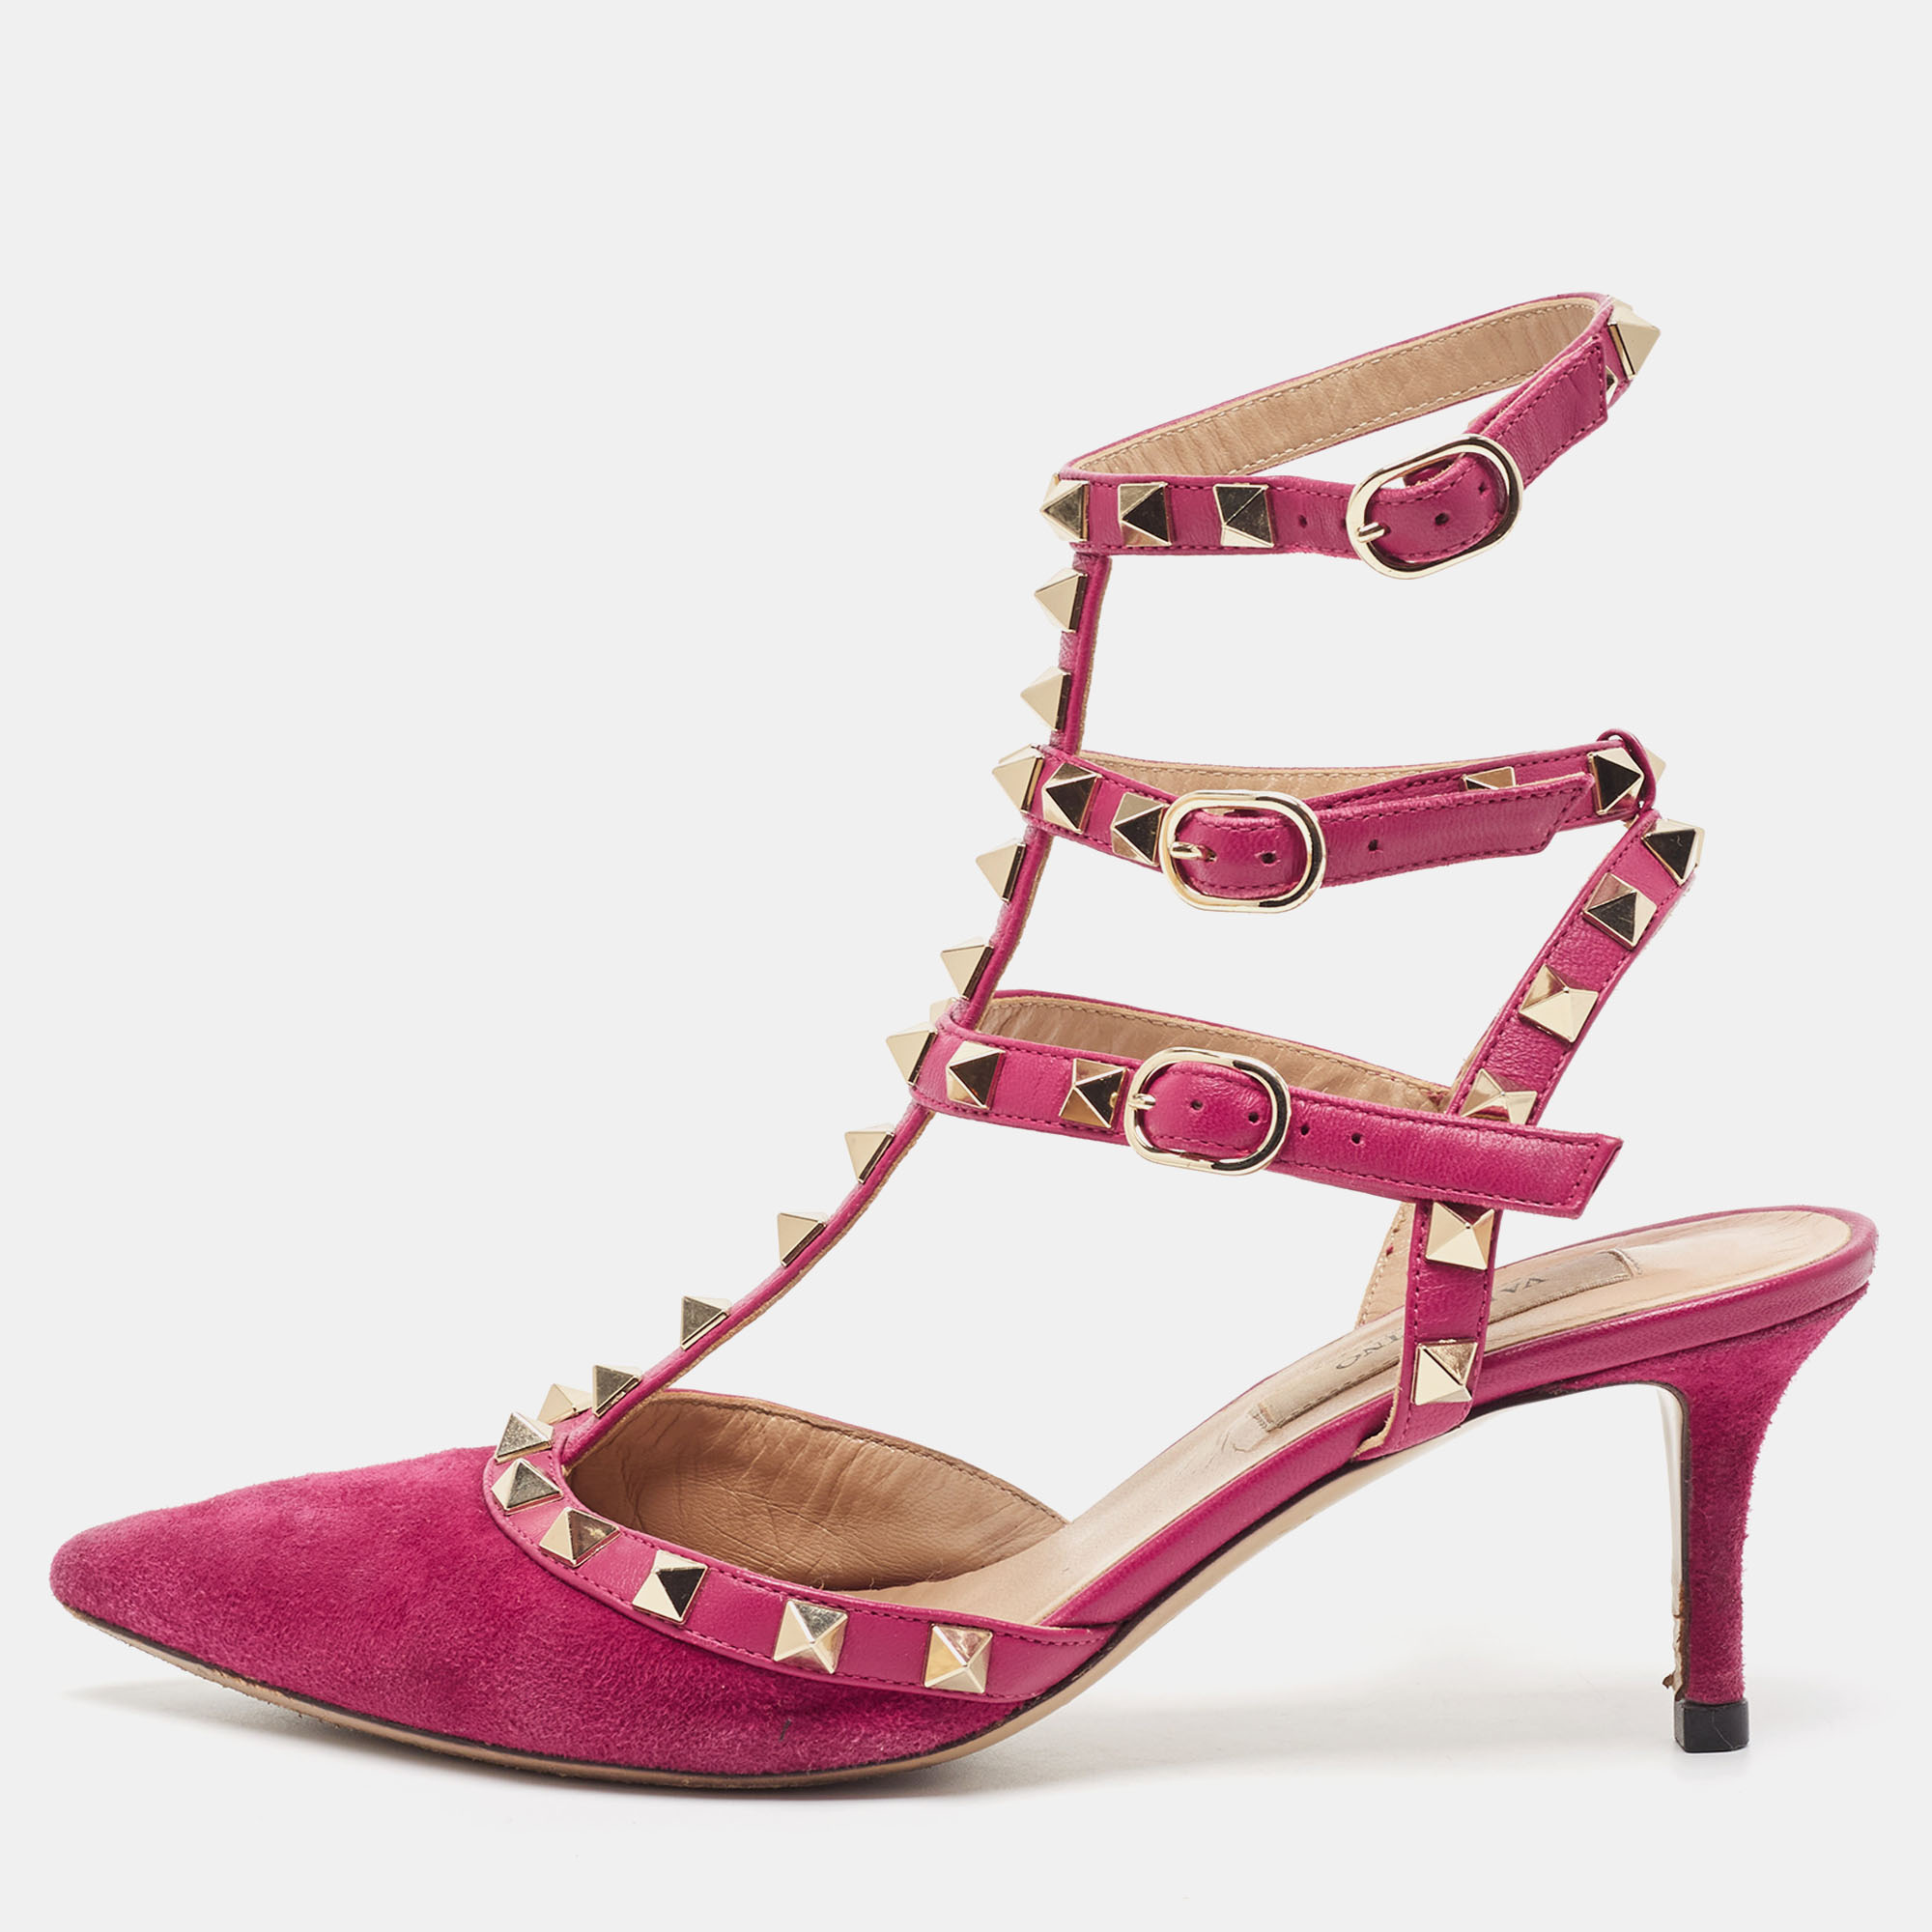 Valentino pink suede rockstud ankle strap pumps size 36